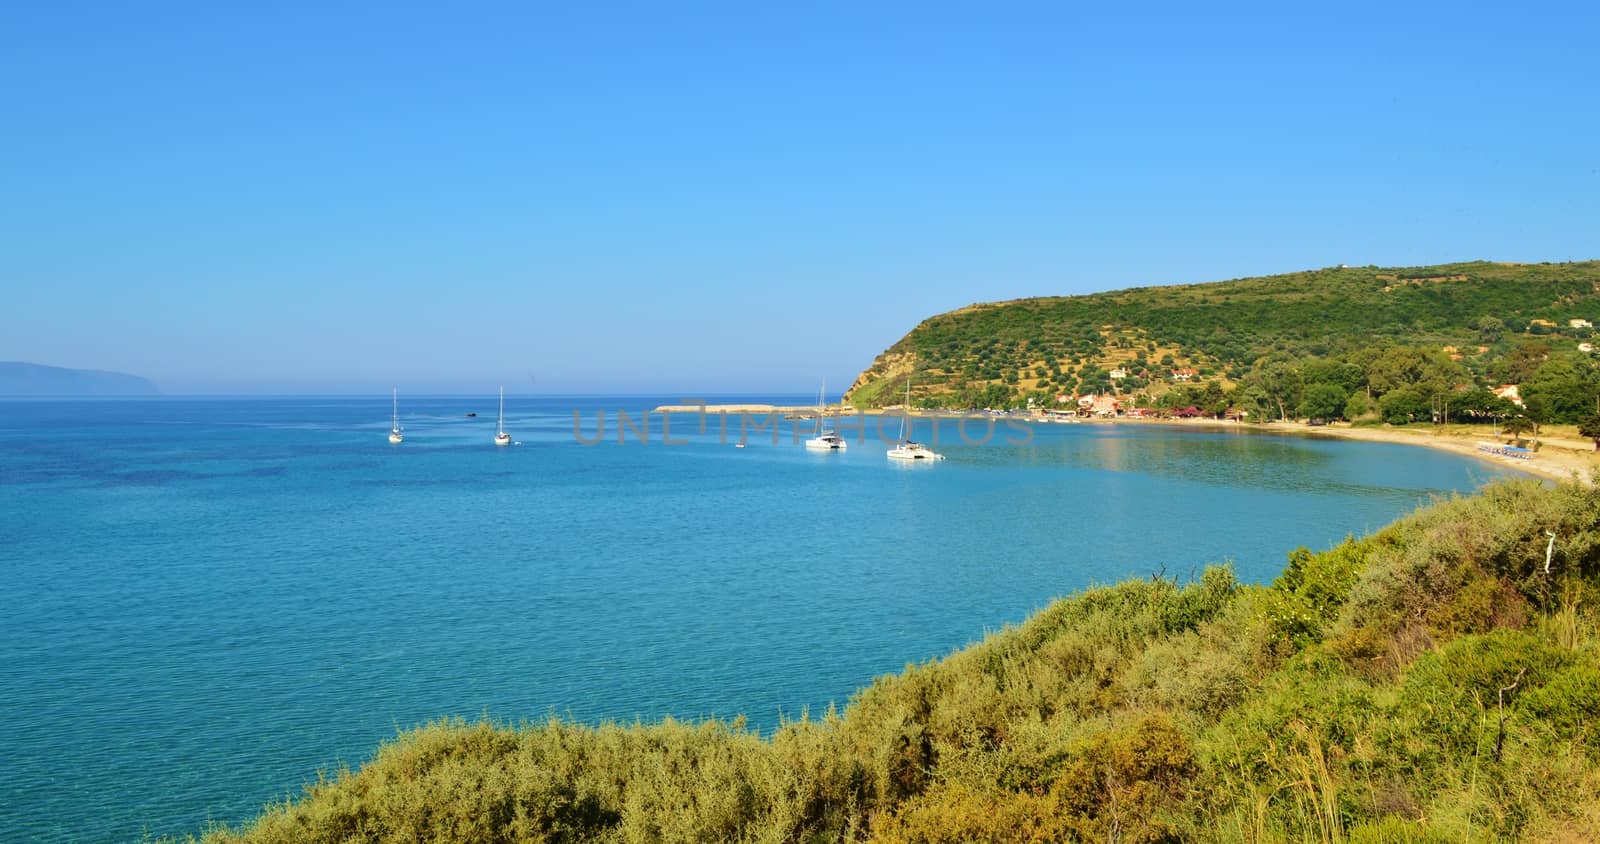 A beautiful coastal image from Katelios on the Greek Island of kefalonia.